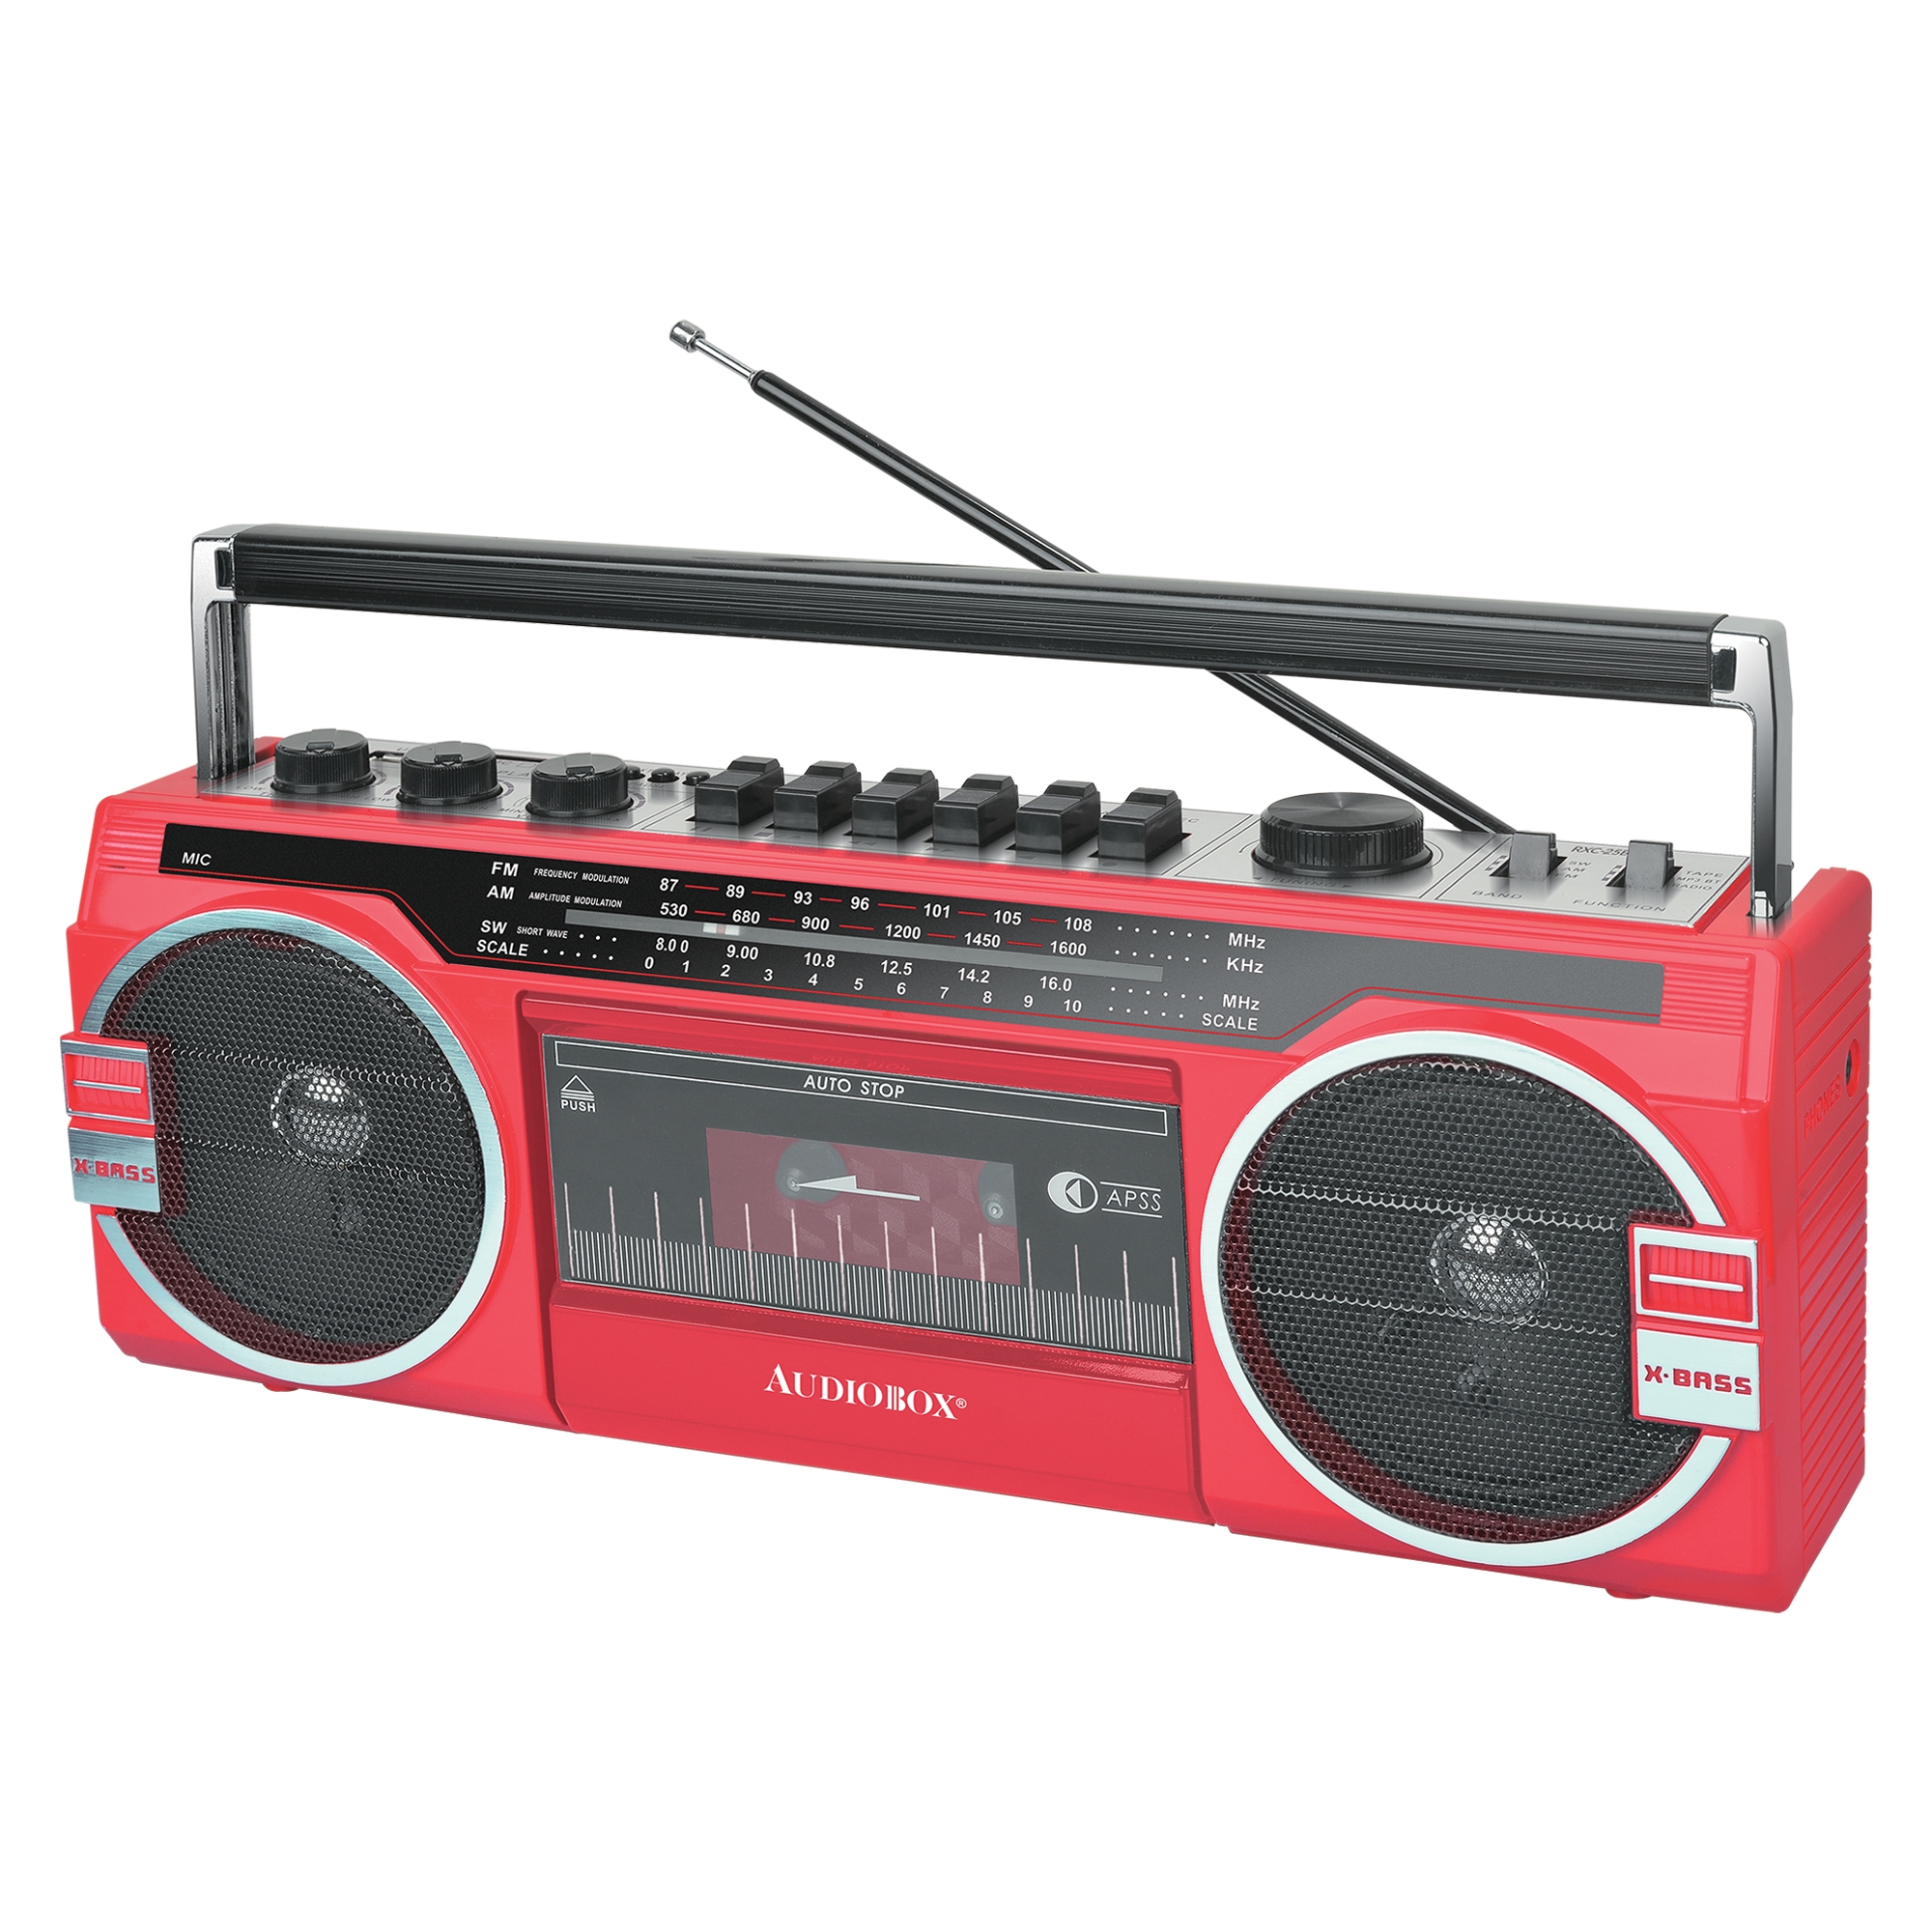 Riptunes Boombox Radio Cassette Player Recorder, AM/FM -SW1/SW2 Radio,  Wireless Streaming, USB/Micro SD Slots, Aux in, Headphone Jack, Convert